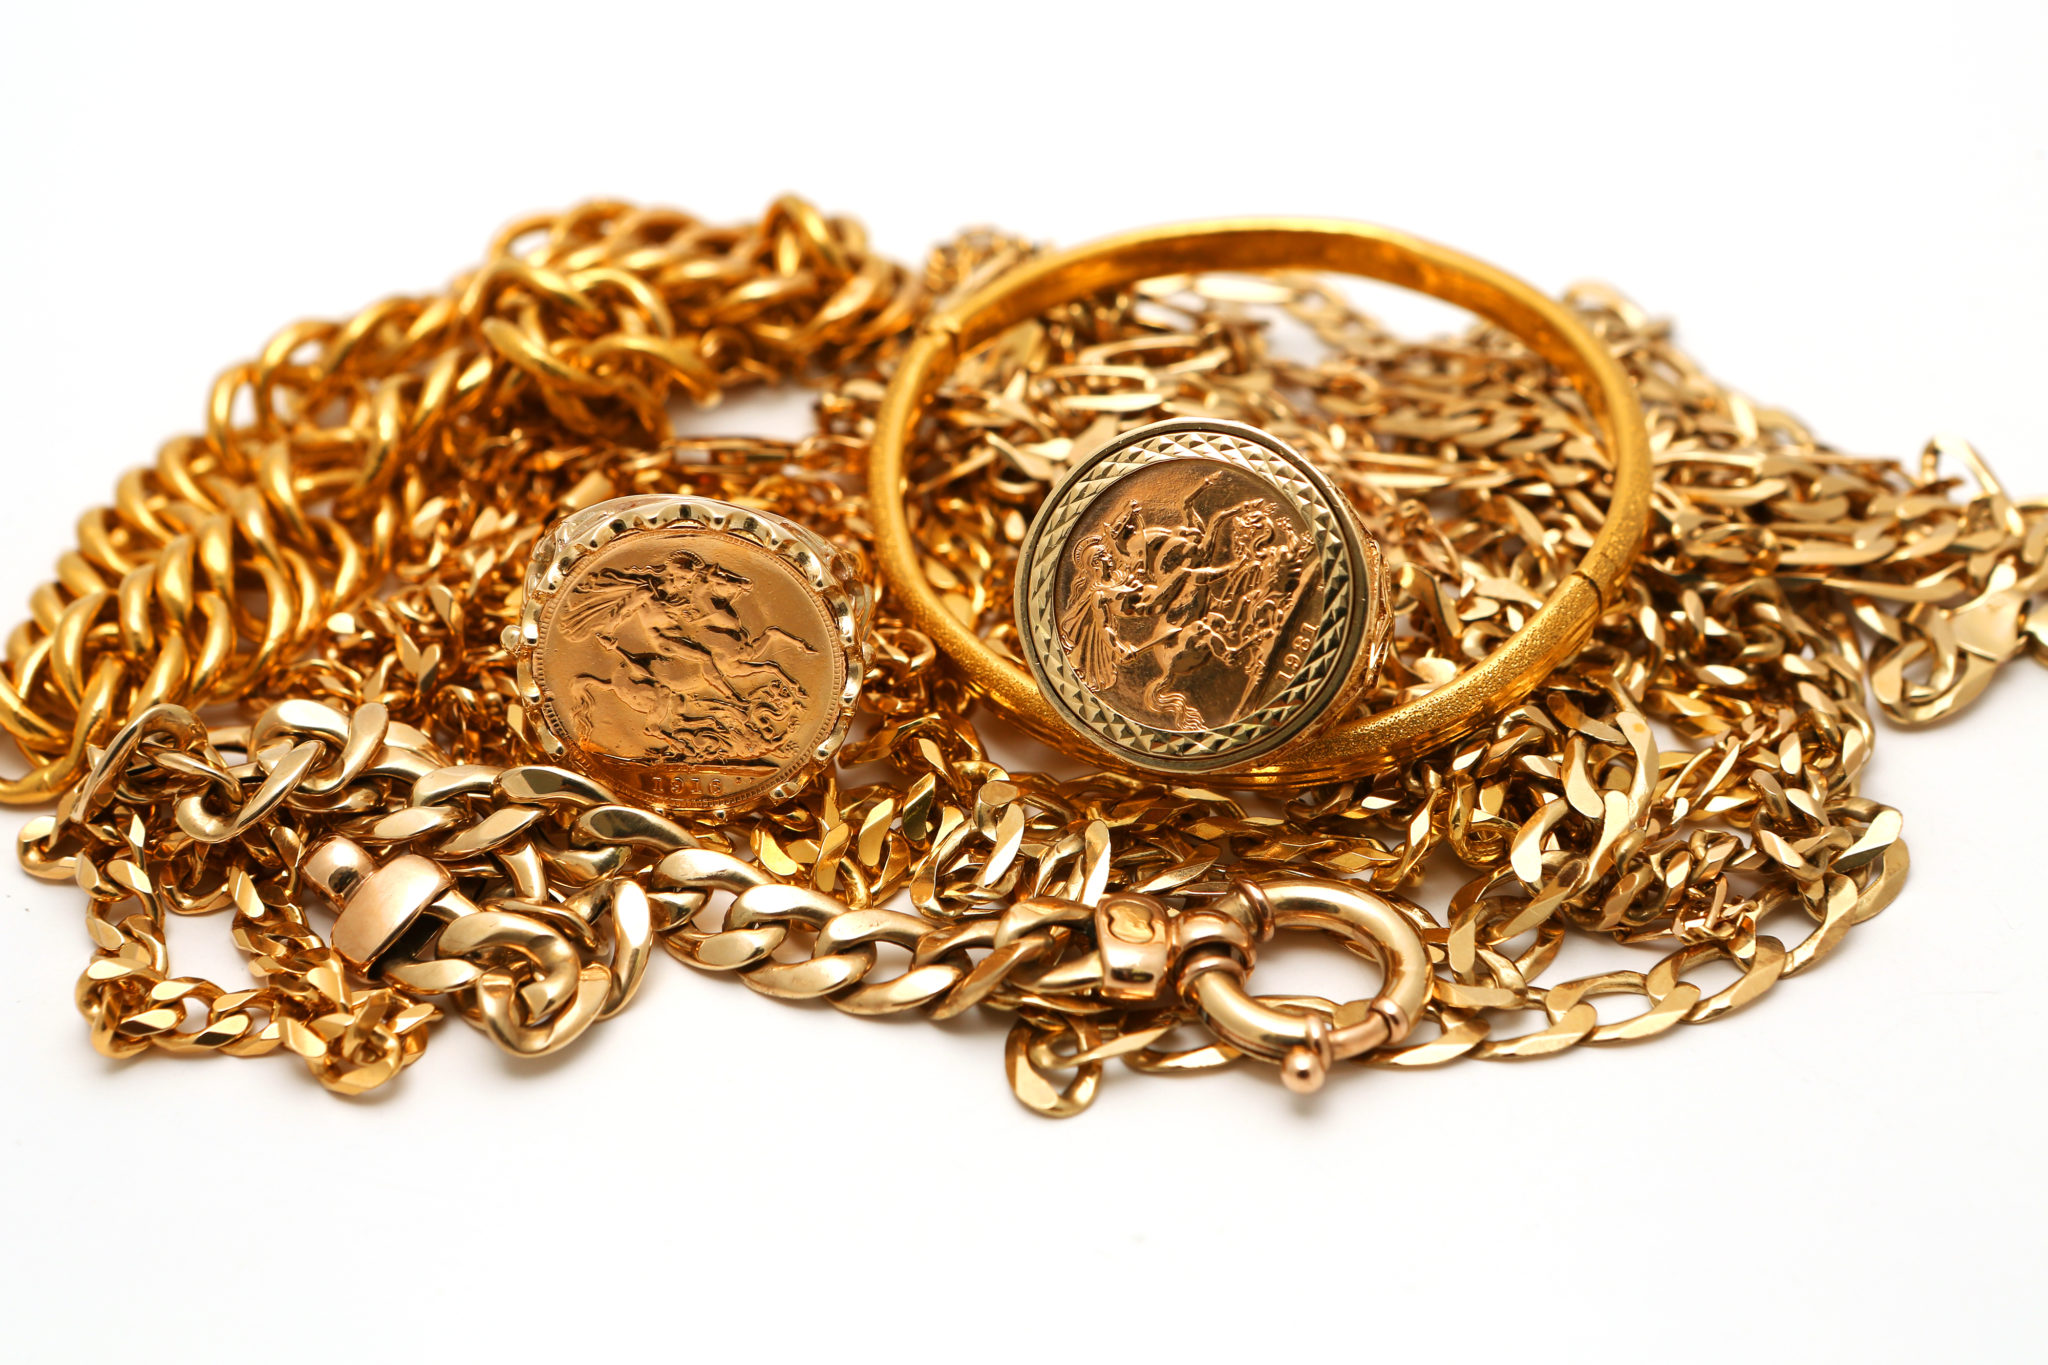 Gold/Bullion & precious metals - Dollar Dealers